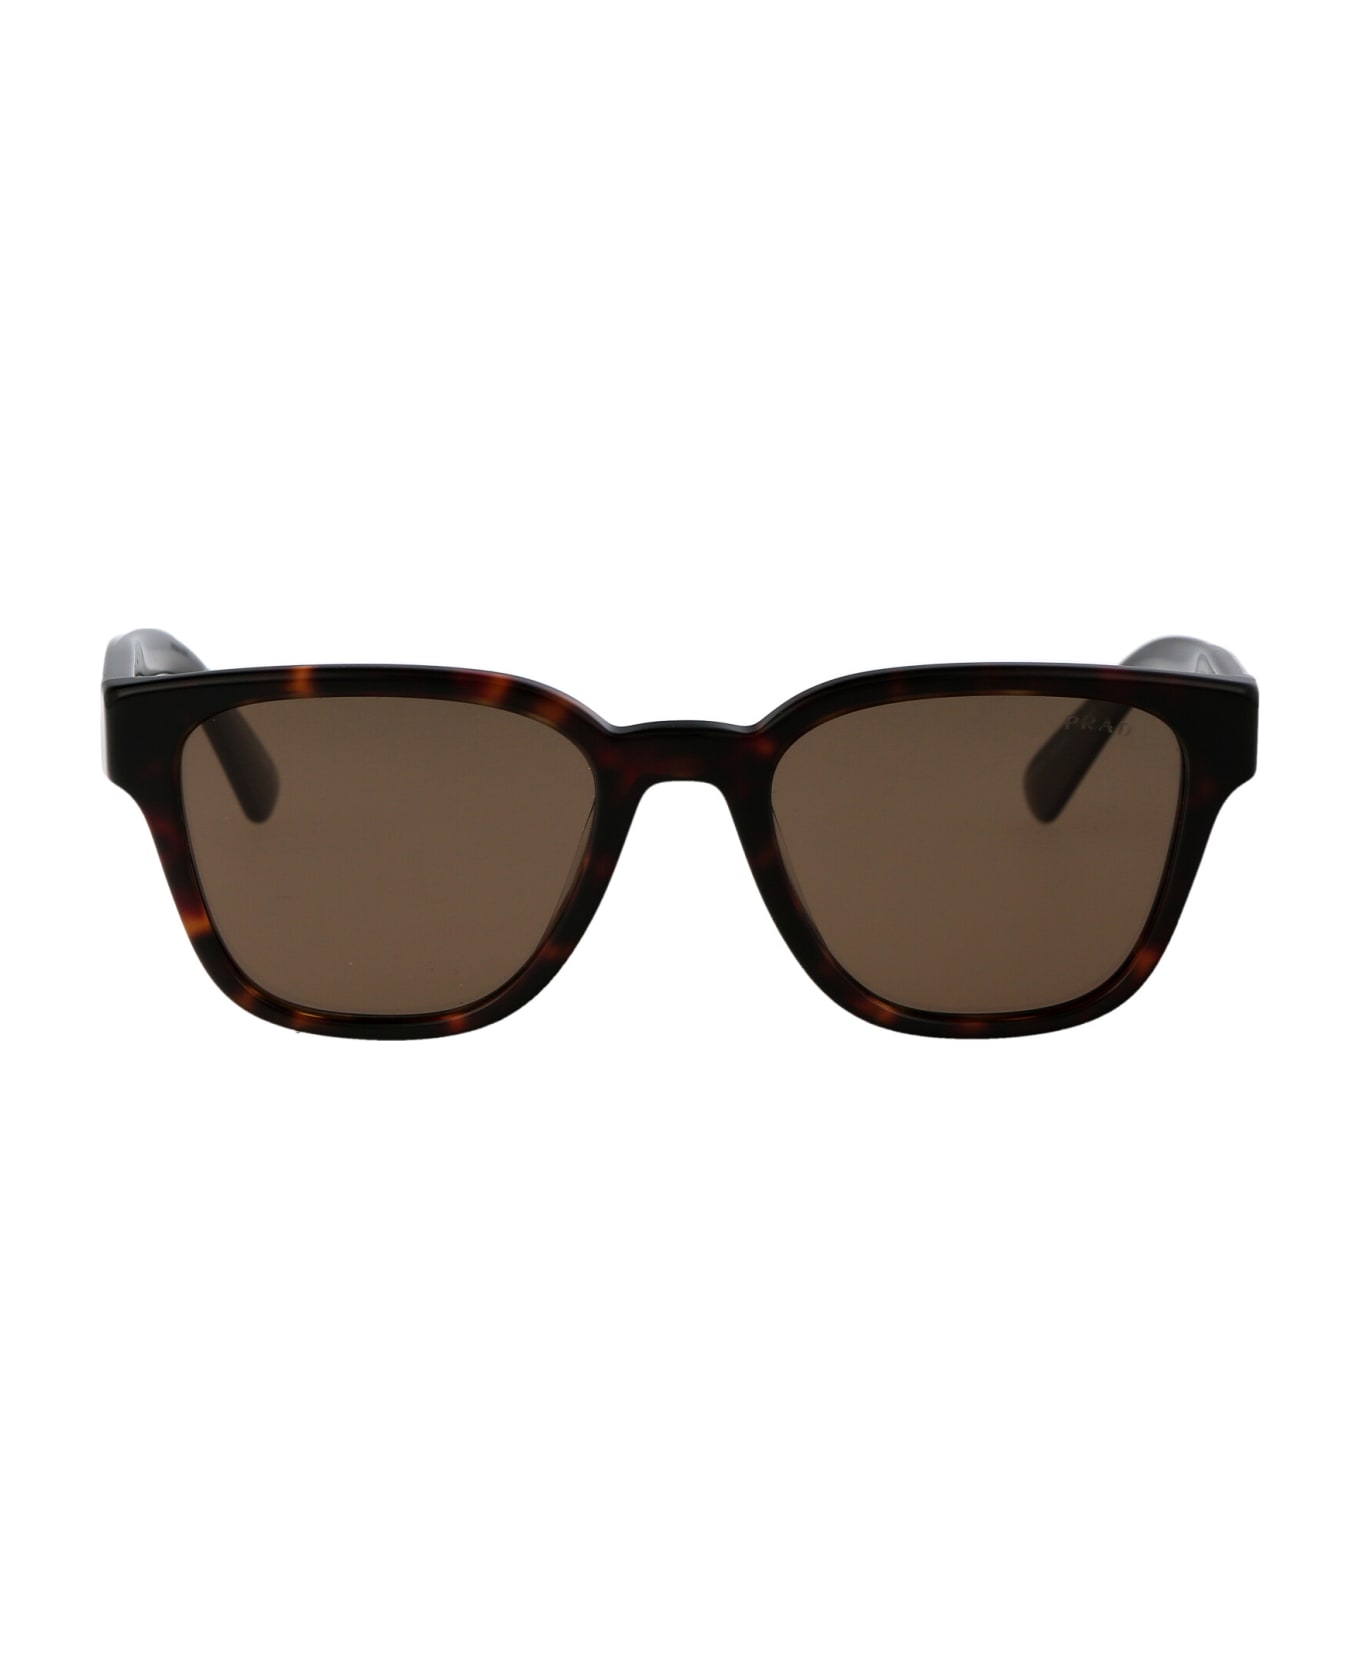 Prada Eyewear 0pr A04s Sunglasses - 17N08T Havana